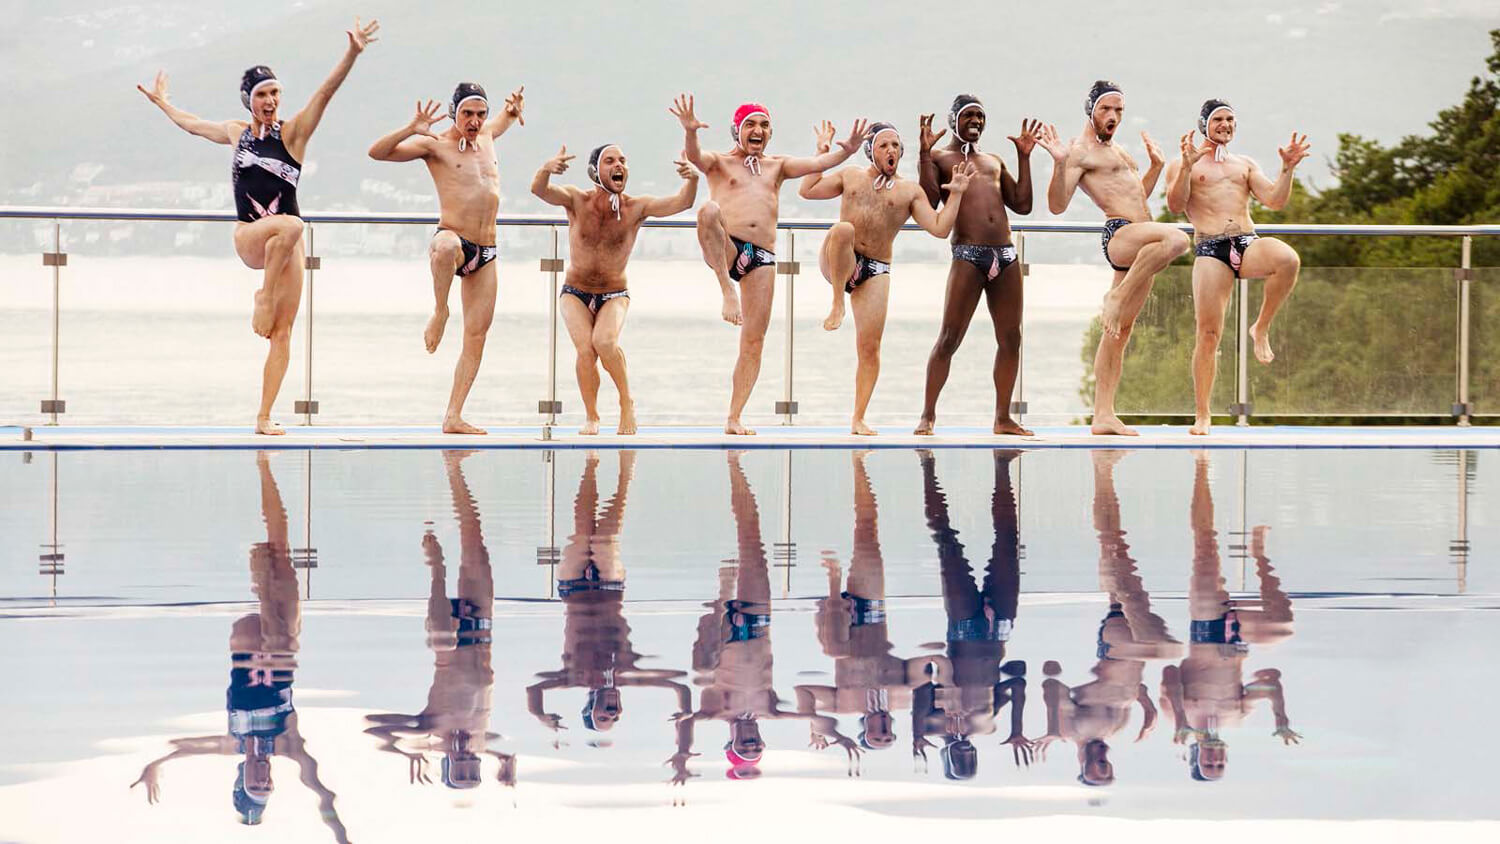 crevettes pailletees film comedie water-polo sport piscine